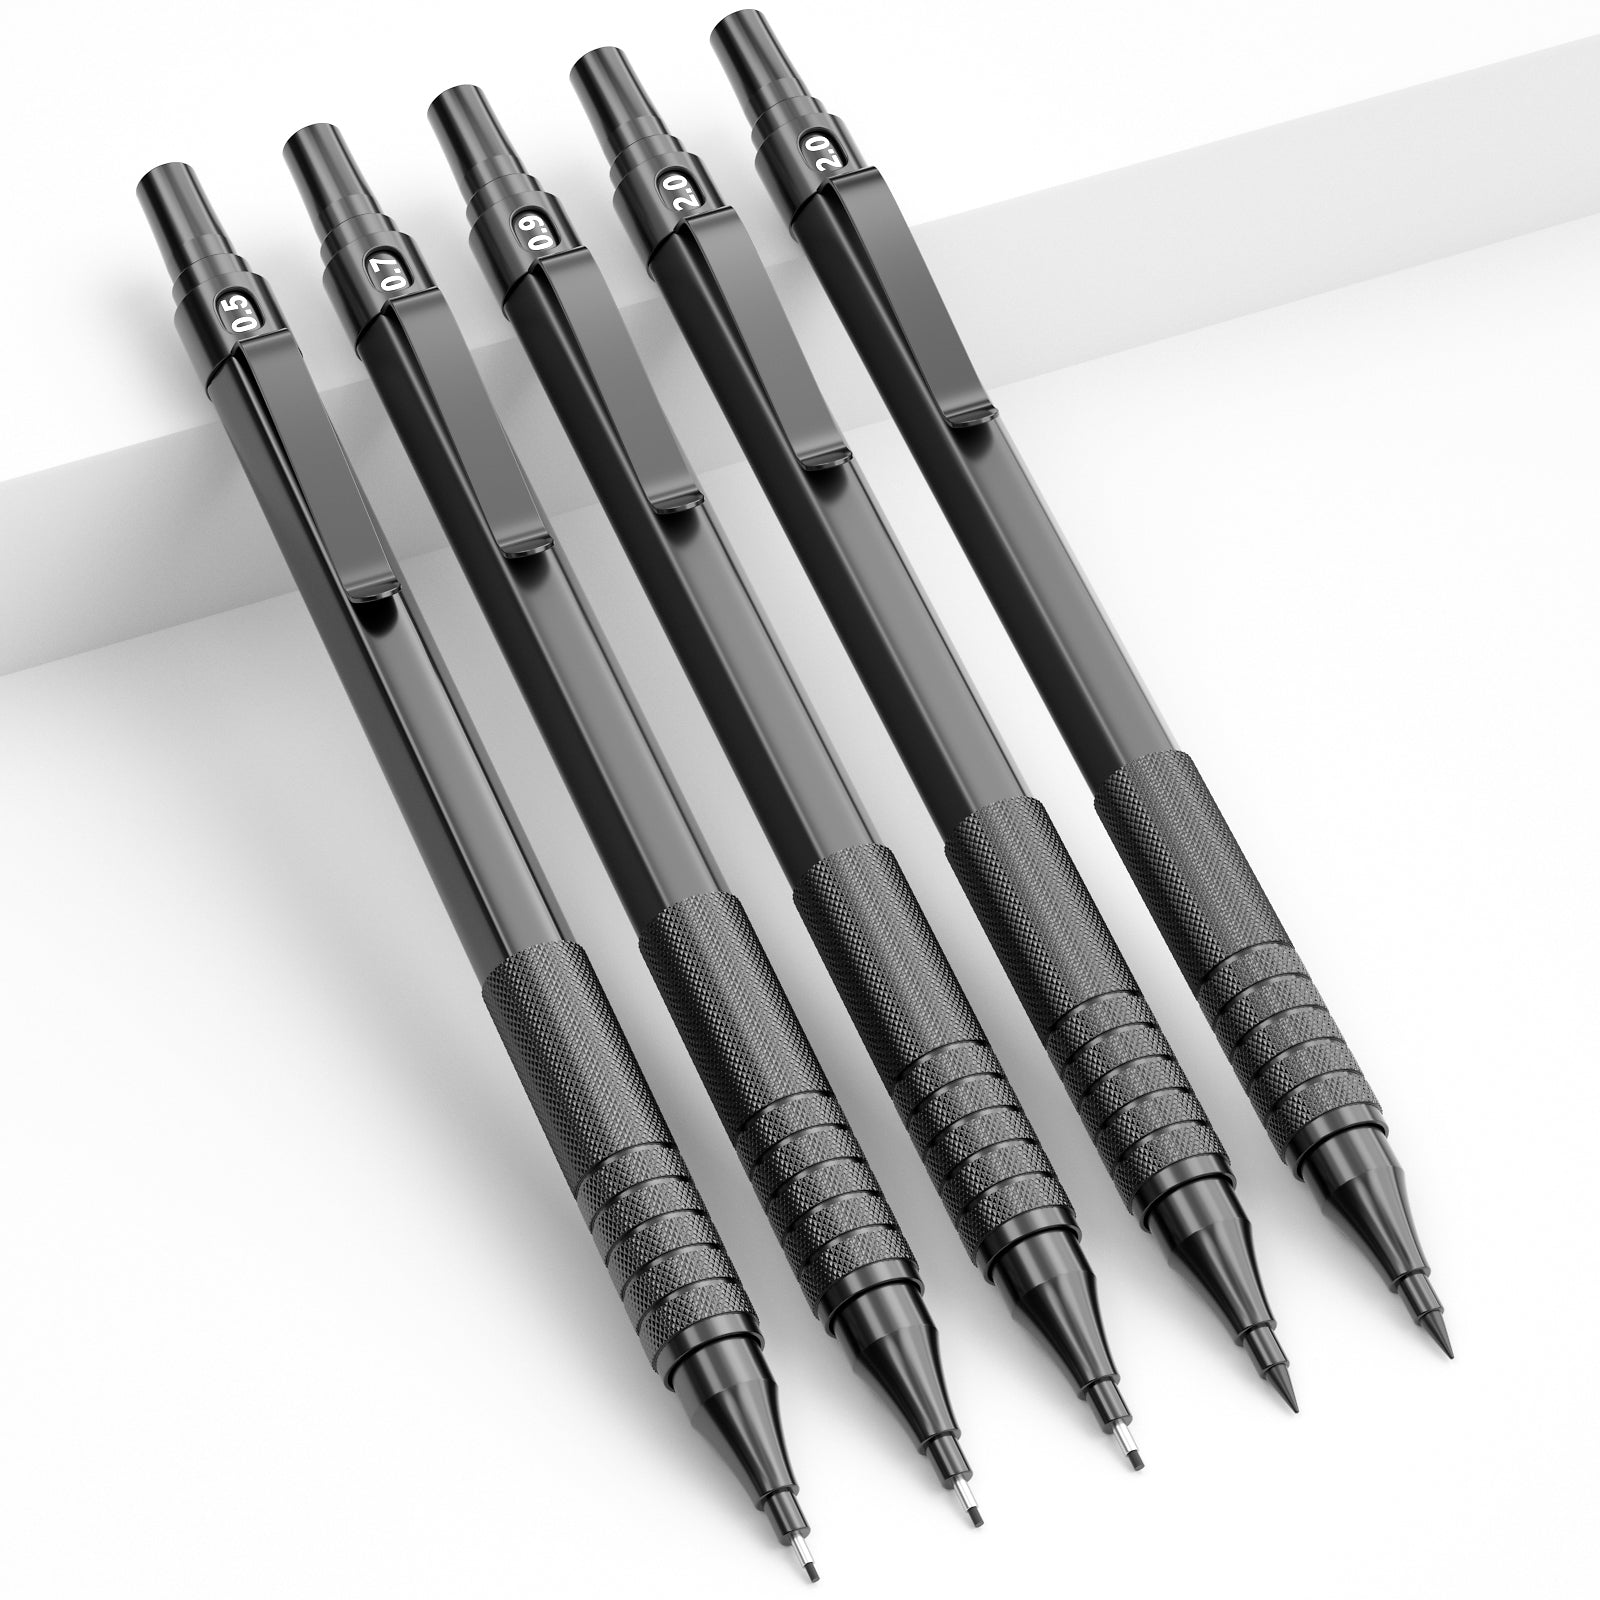 1 Nicpro 5 Pcs Art Mechanical Pencil Set, Metal Drafting Pencils